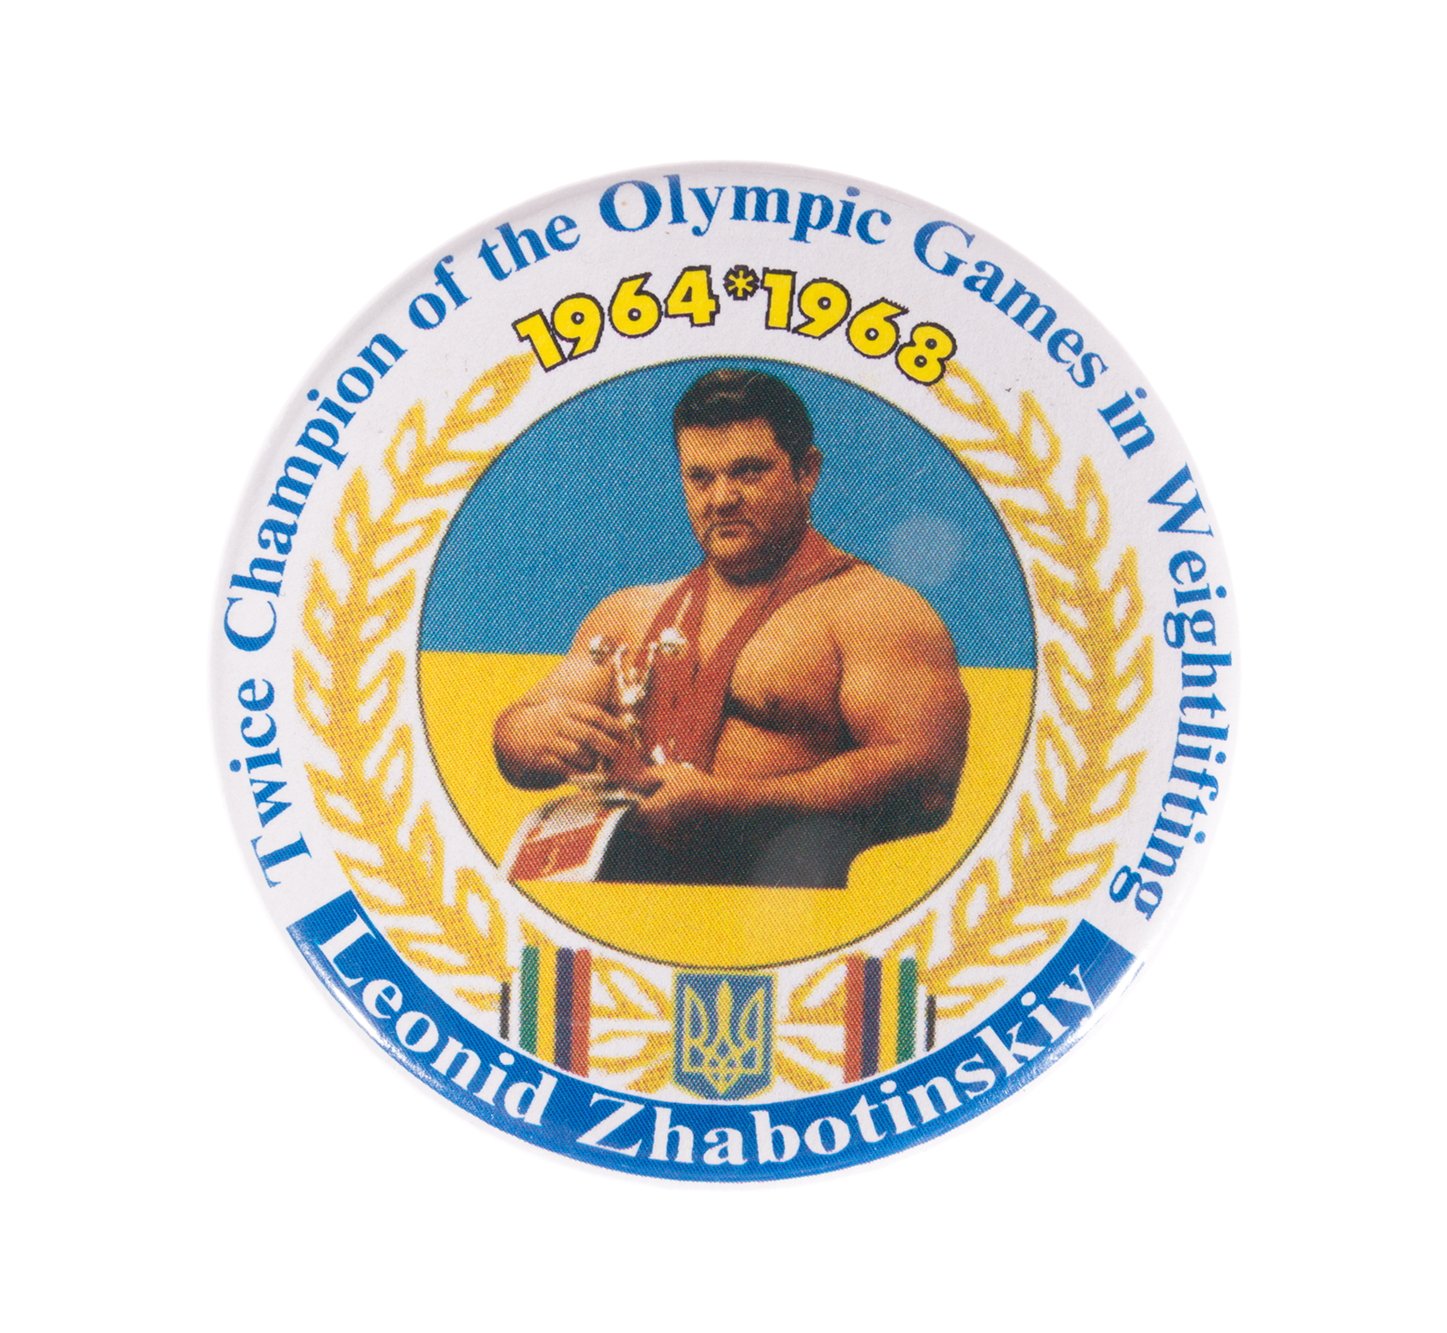 Leonid Zhabotinsky souvenir badge